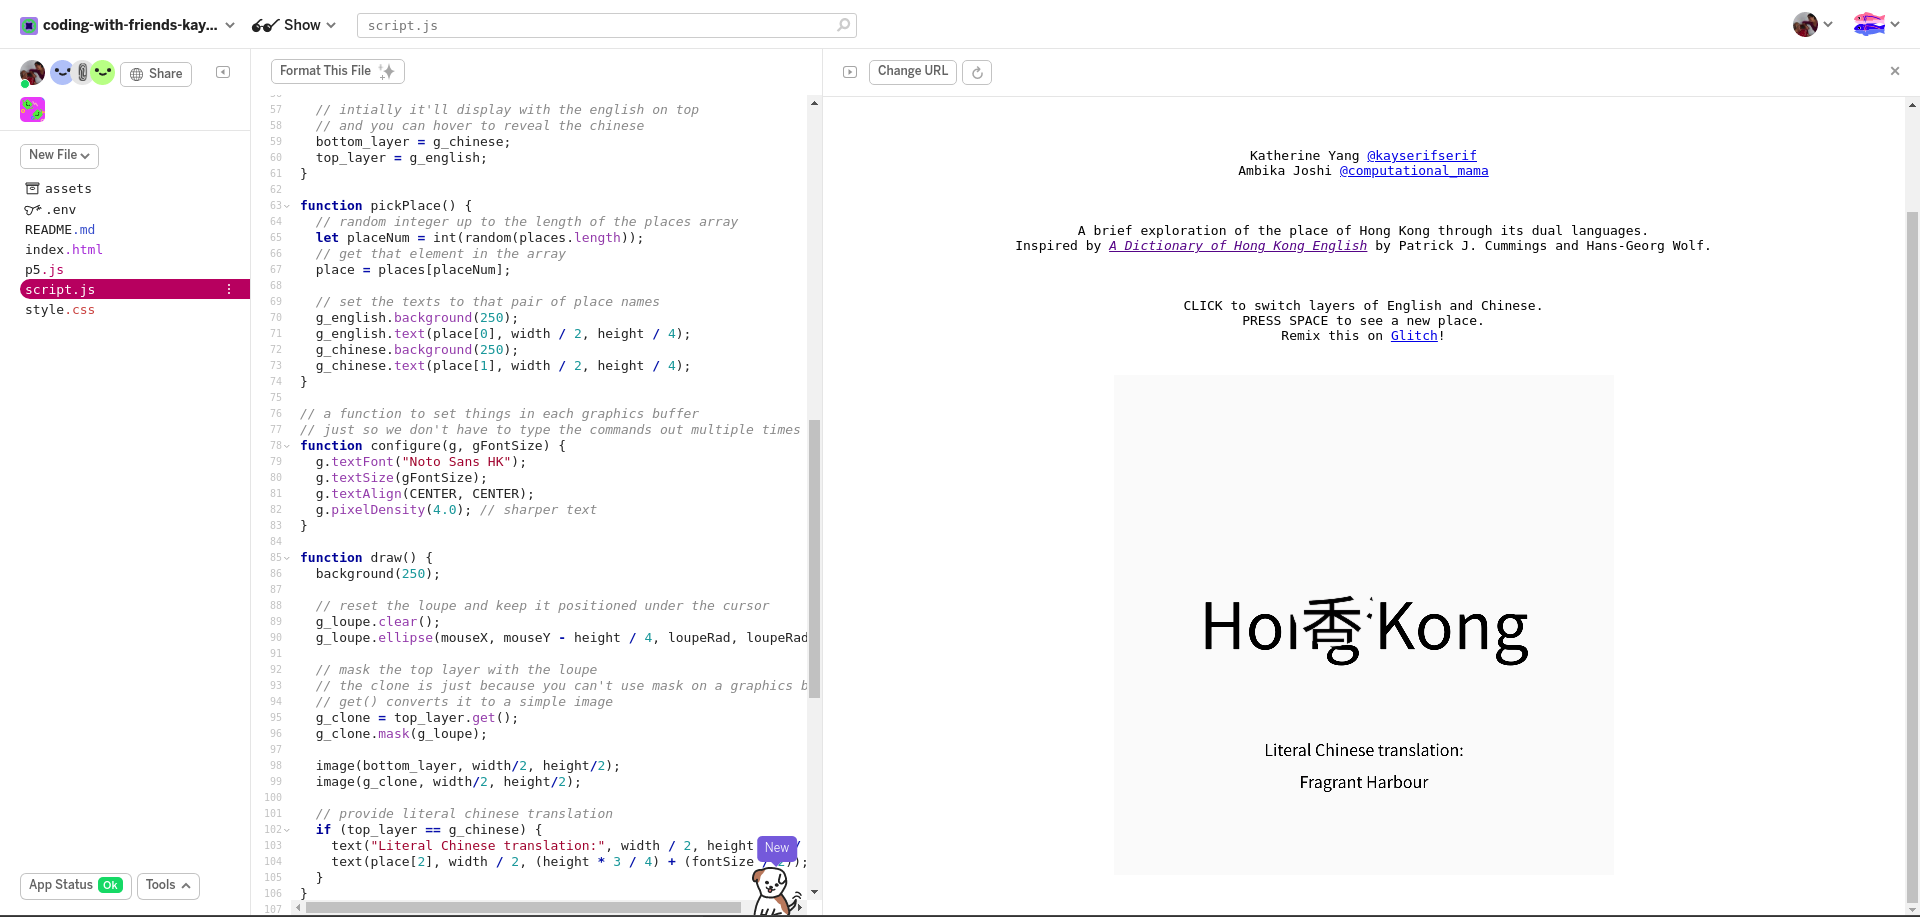 screenshot of the project code window